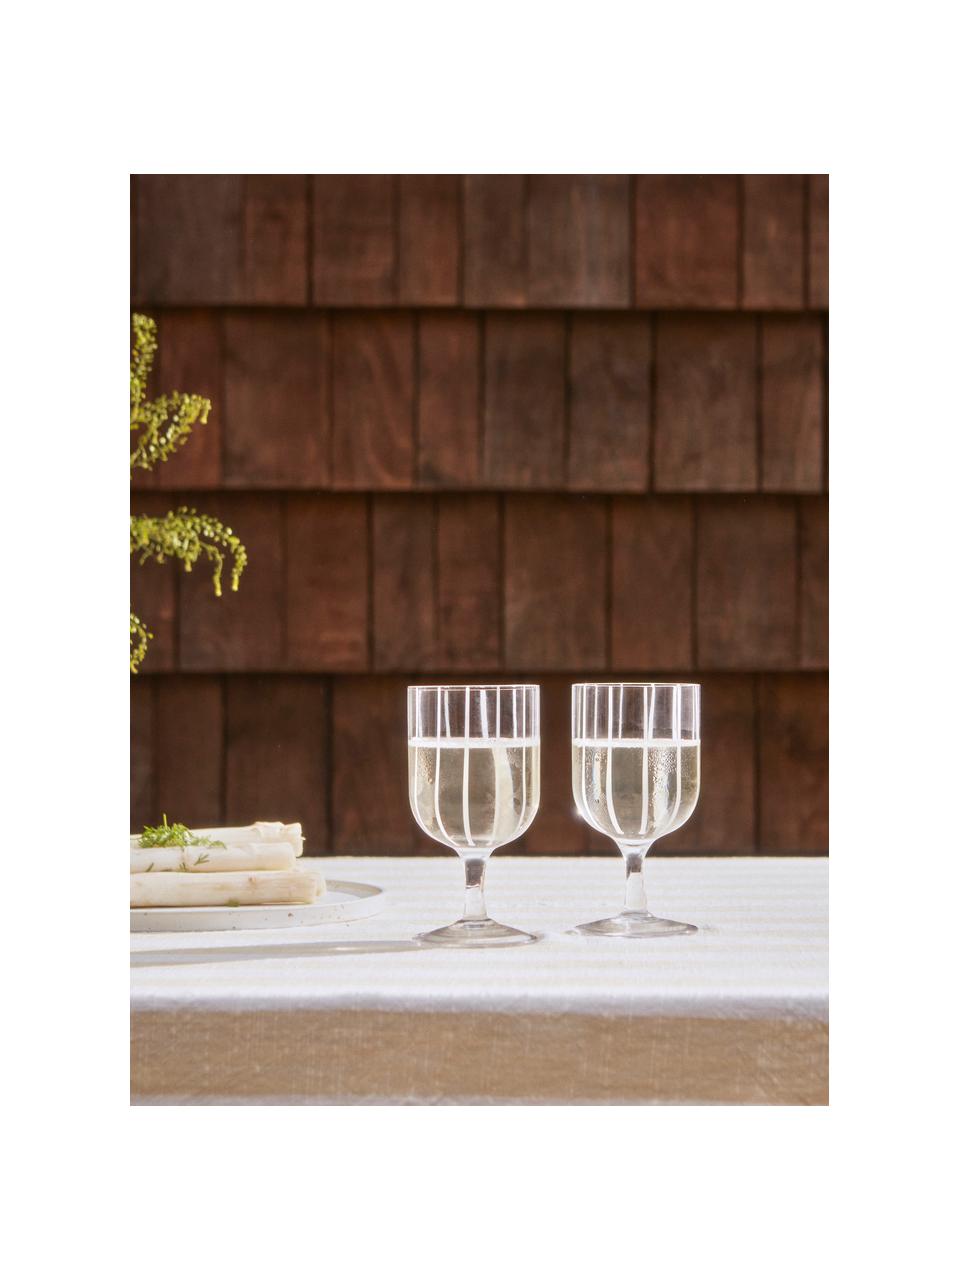 Bicchieri per vino rosso in vetro soffiato 2 pz, Vetro, Trasparente, bianco, Ø 8 x Alt. 15 cm, 350 ml